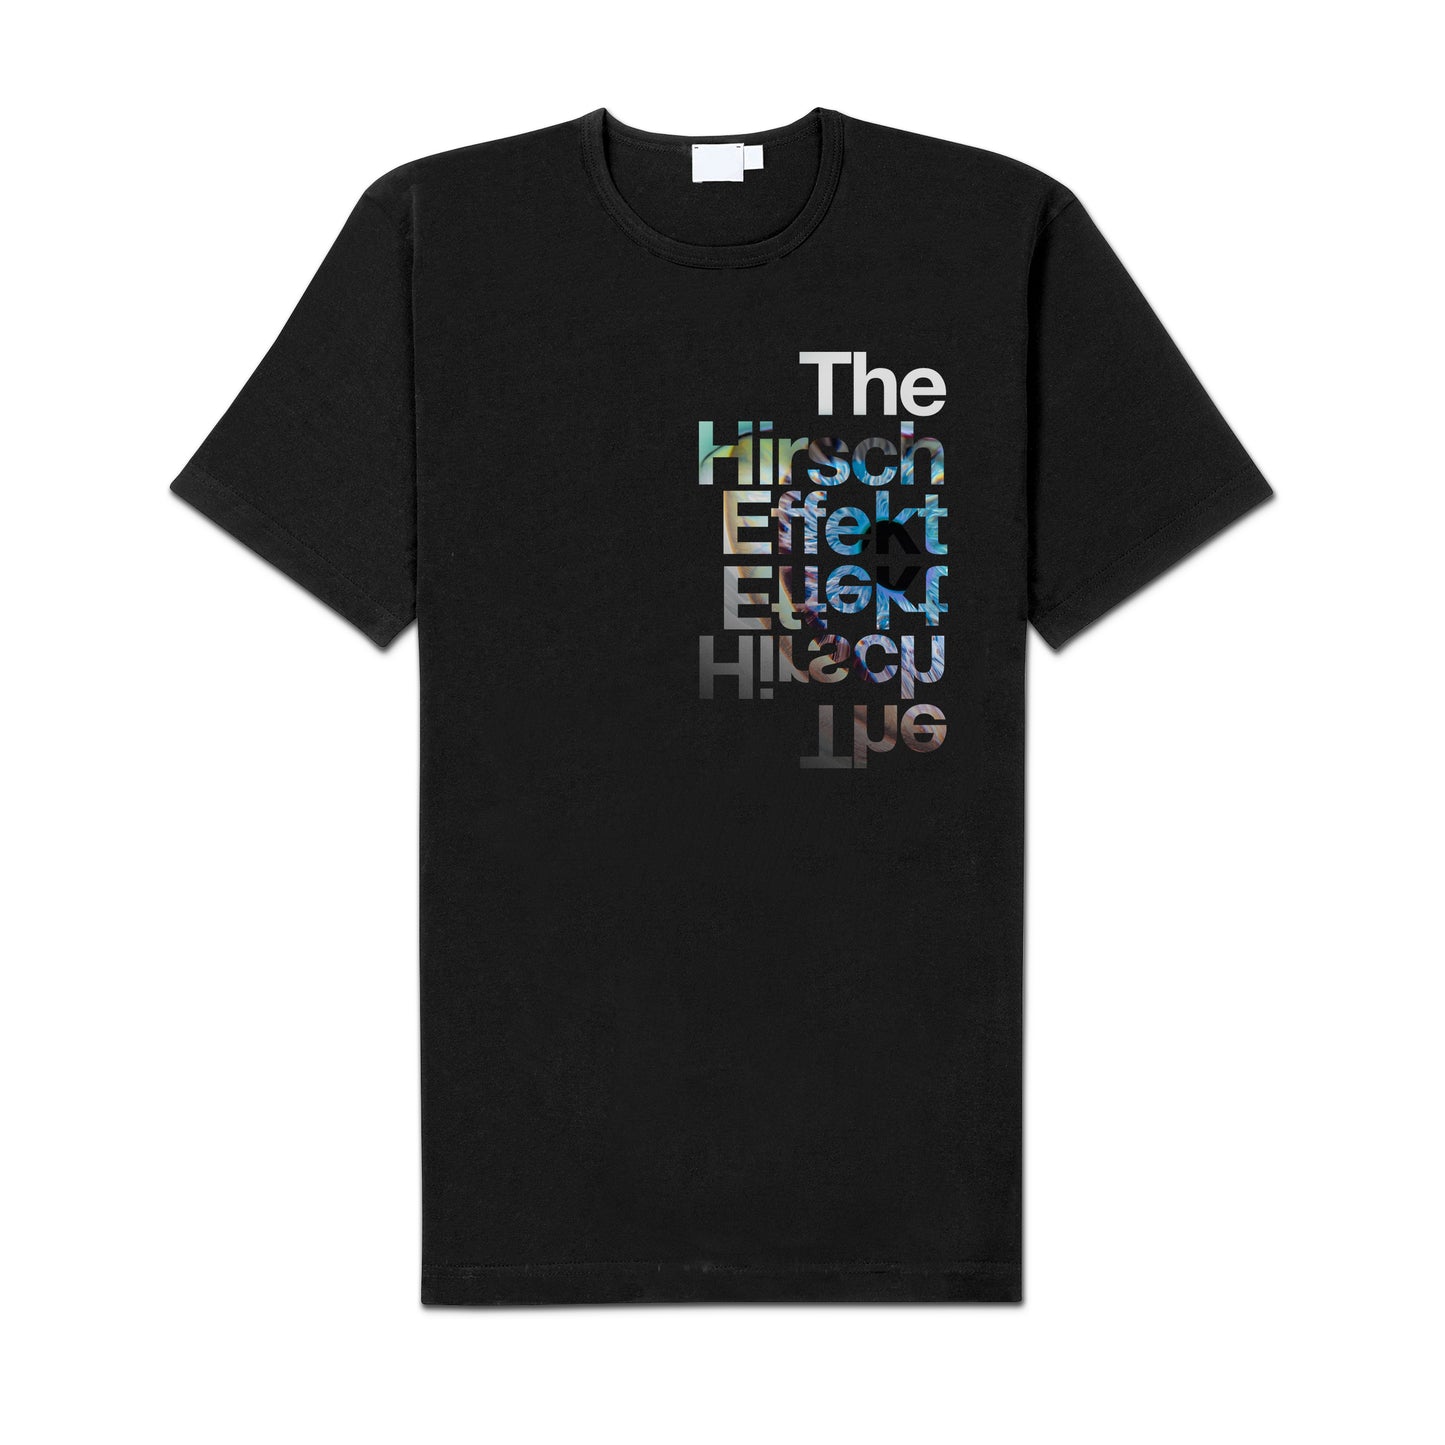 The Hirsch Effekt "Urian" / "Eye" Shirt-Bundle